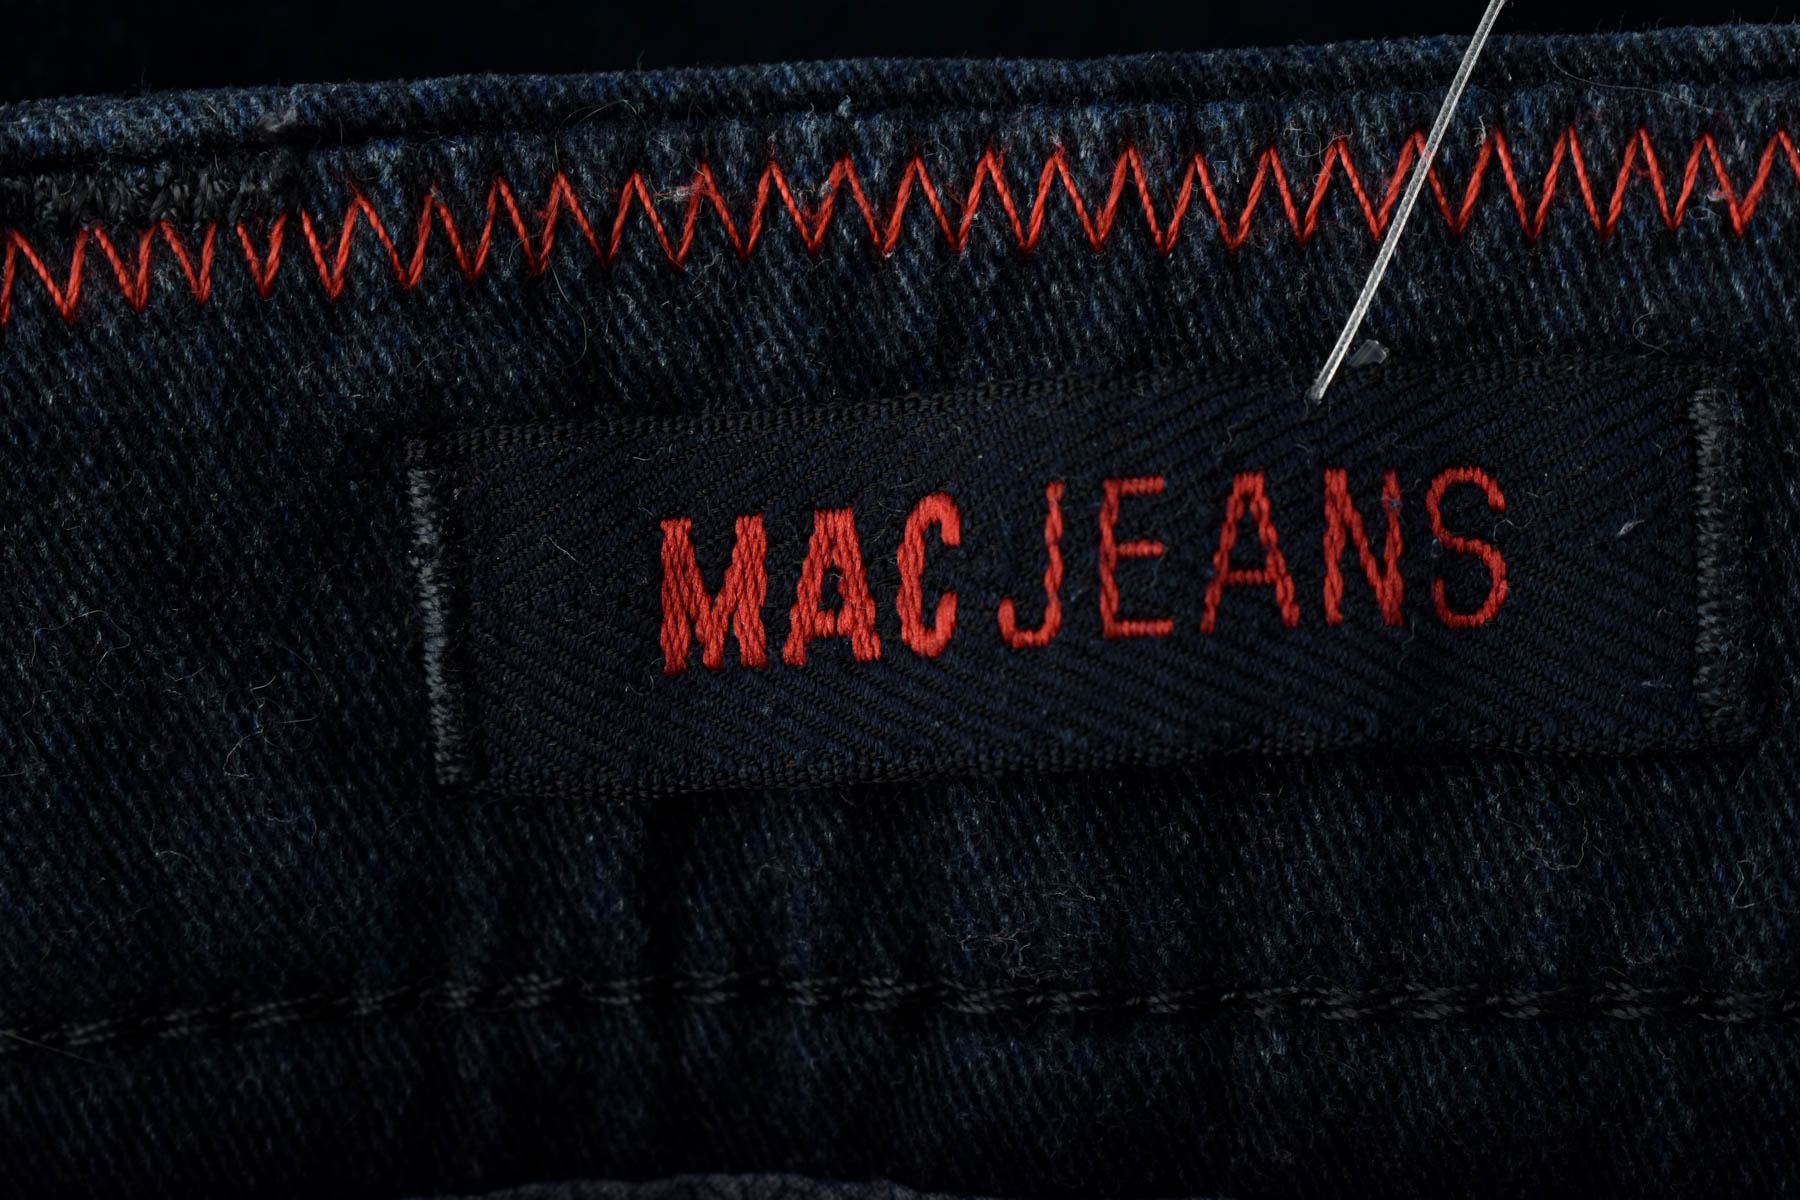 Men's jeans - MAC - 2